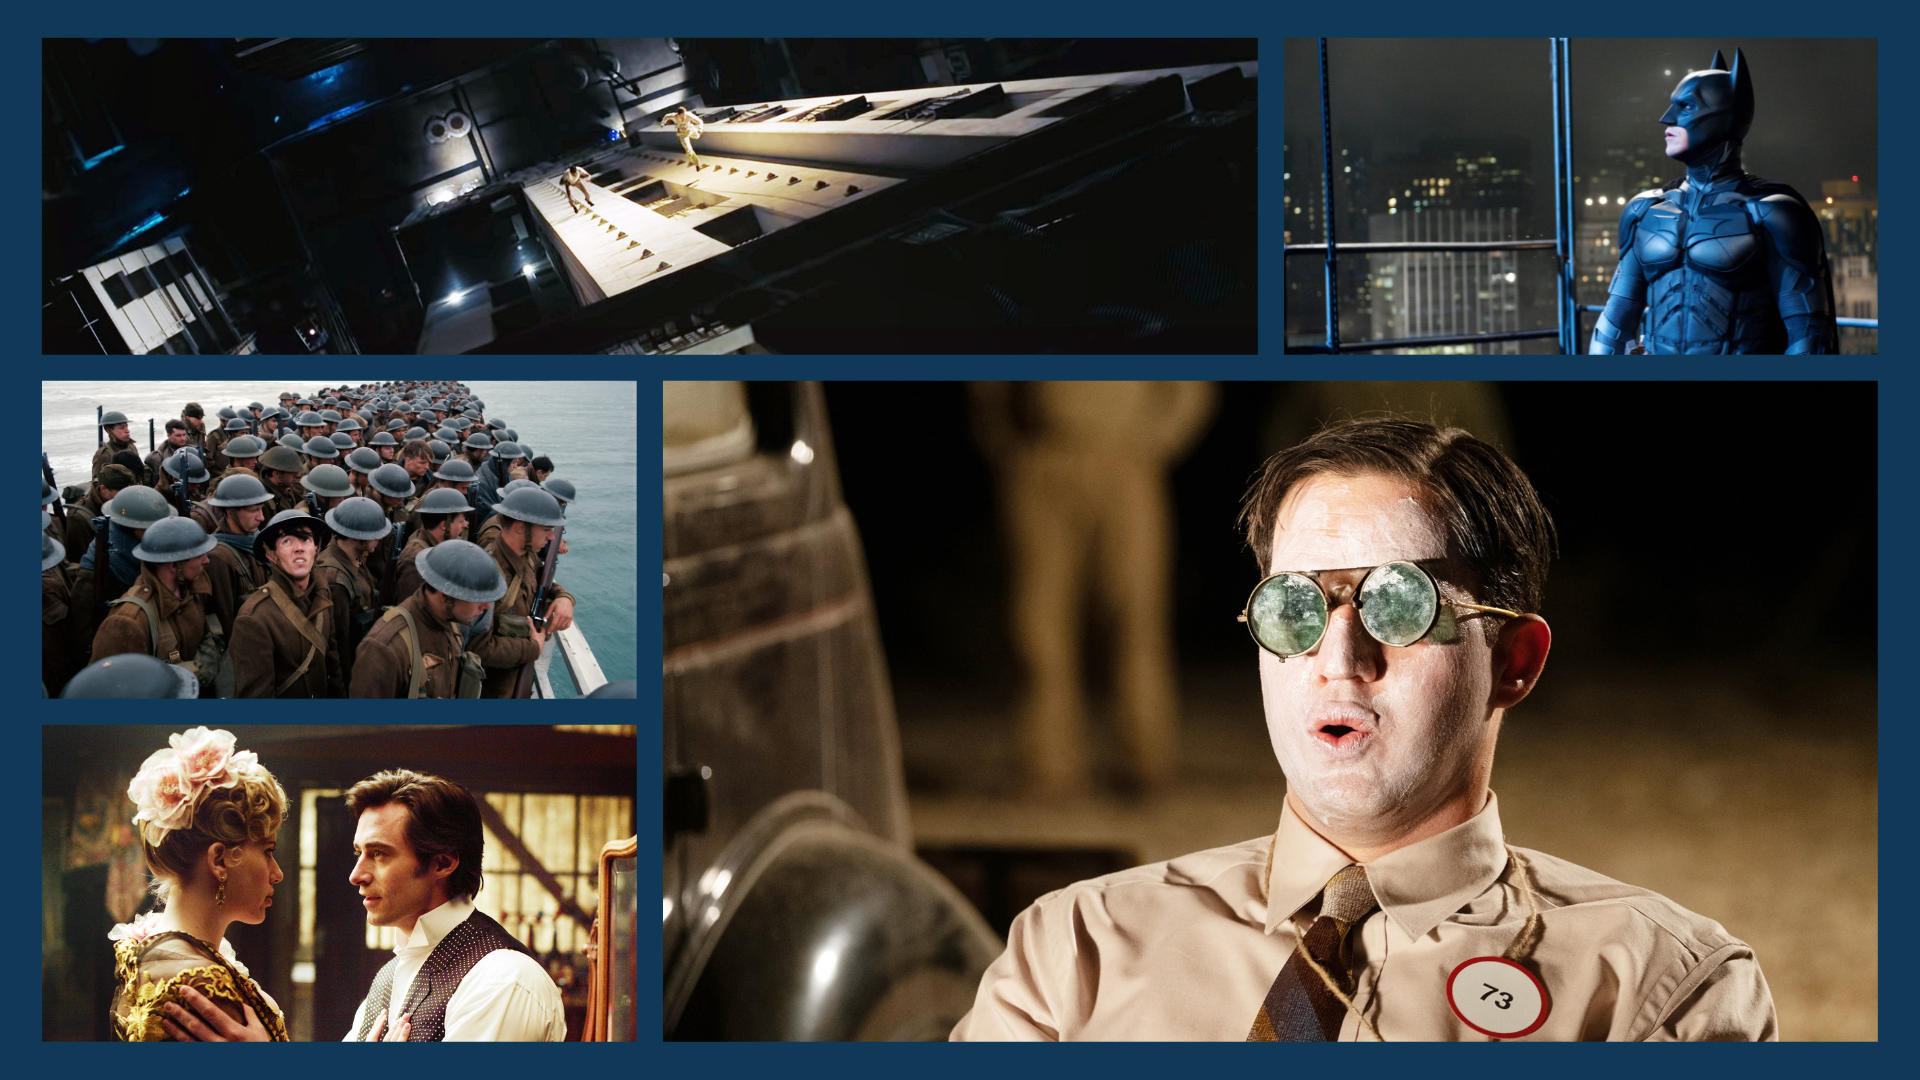 Films by Christopher Nolan, Ranking: "The Prestige", "Dunkirk", "Tenet", "The Dark Knight Rises" and "Oppenheimer"